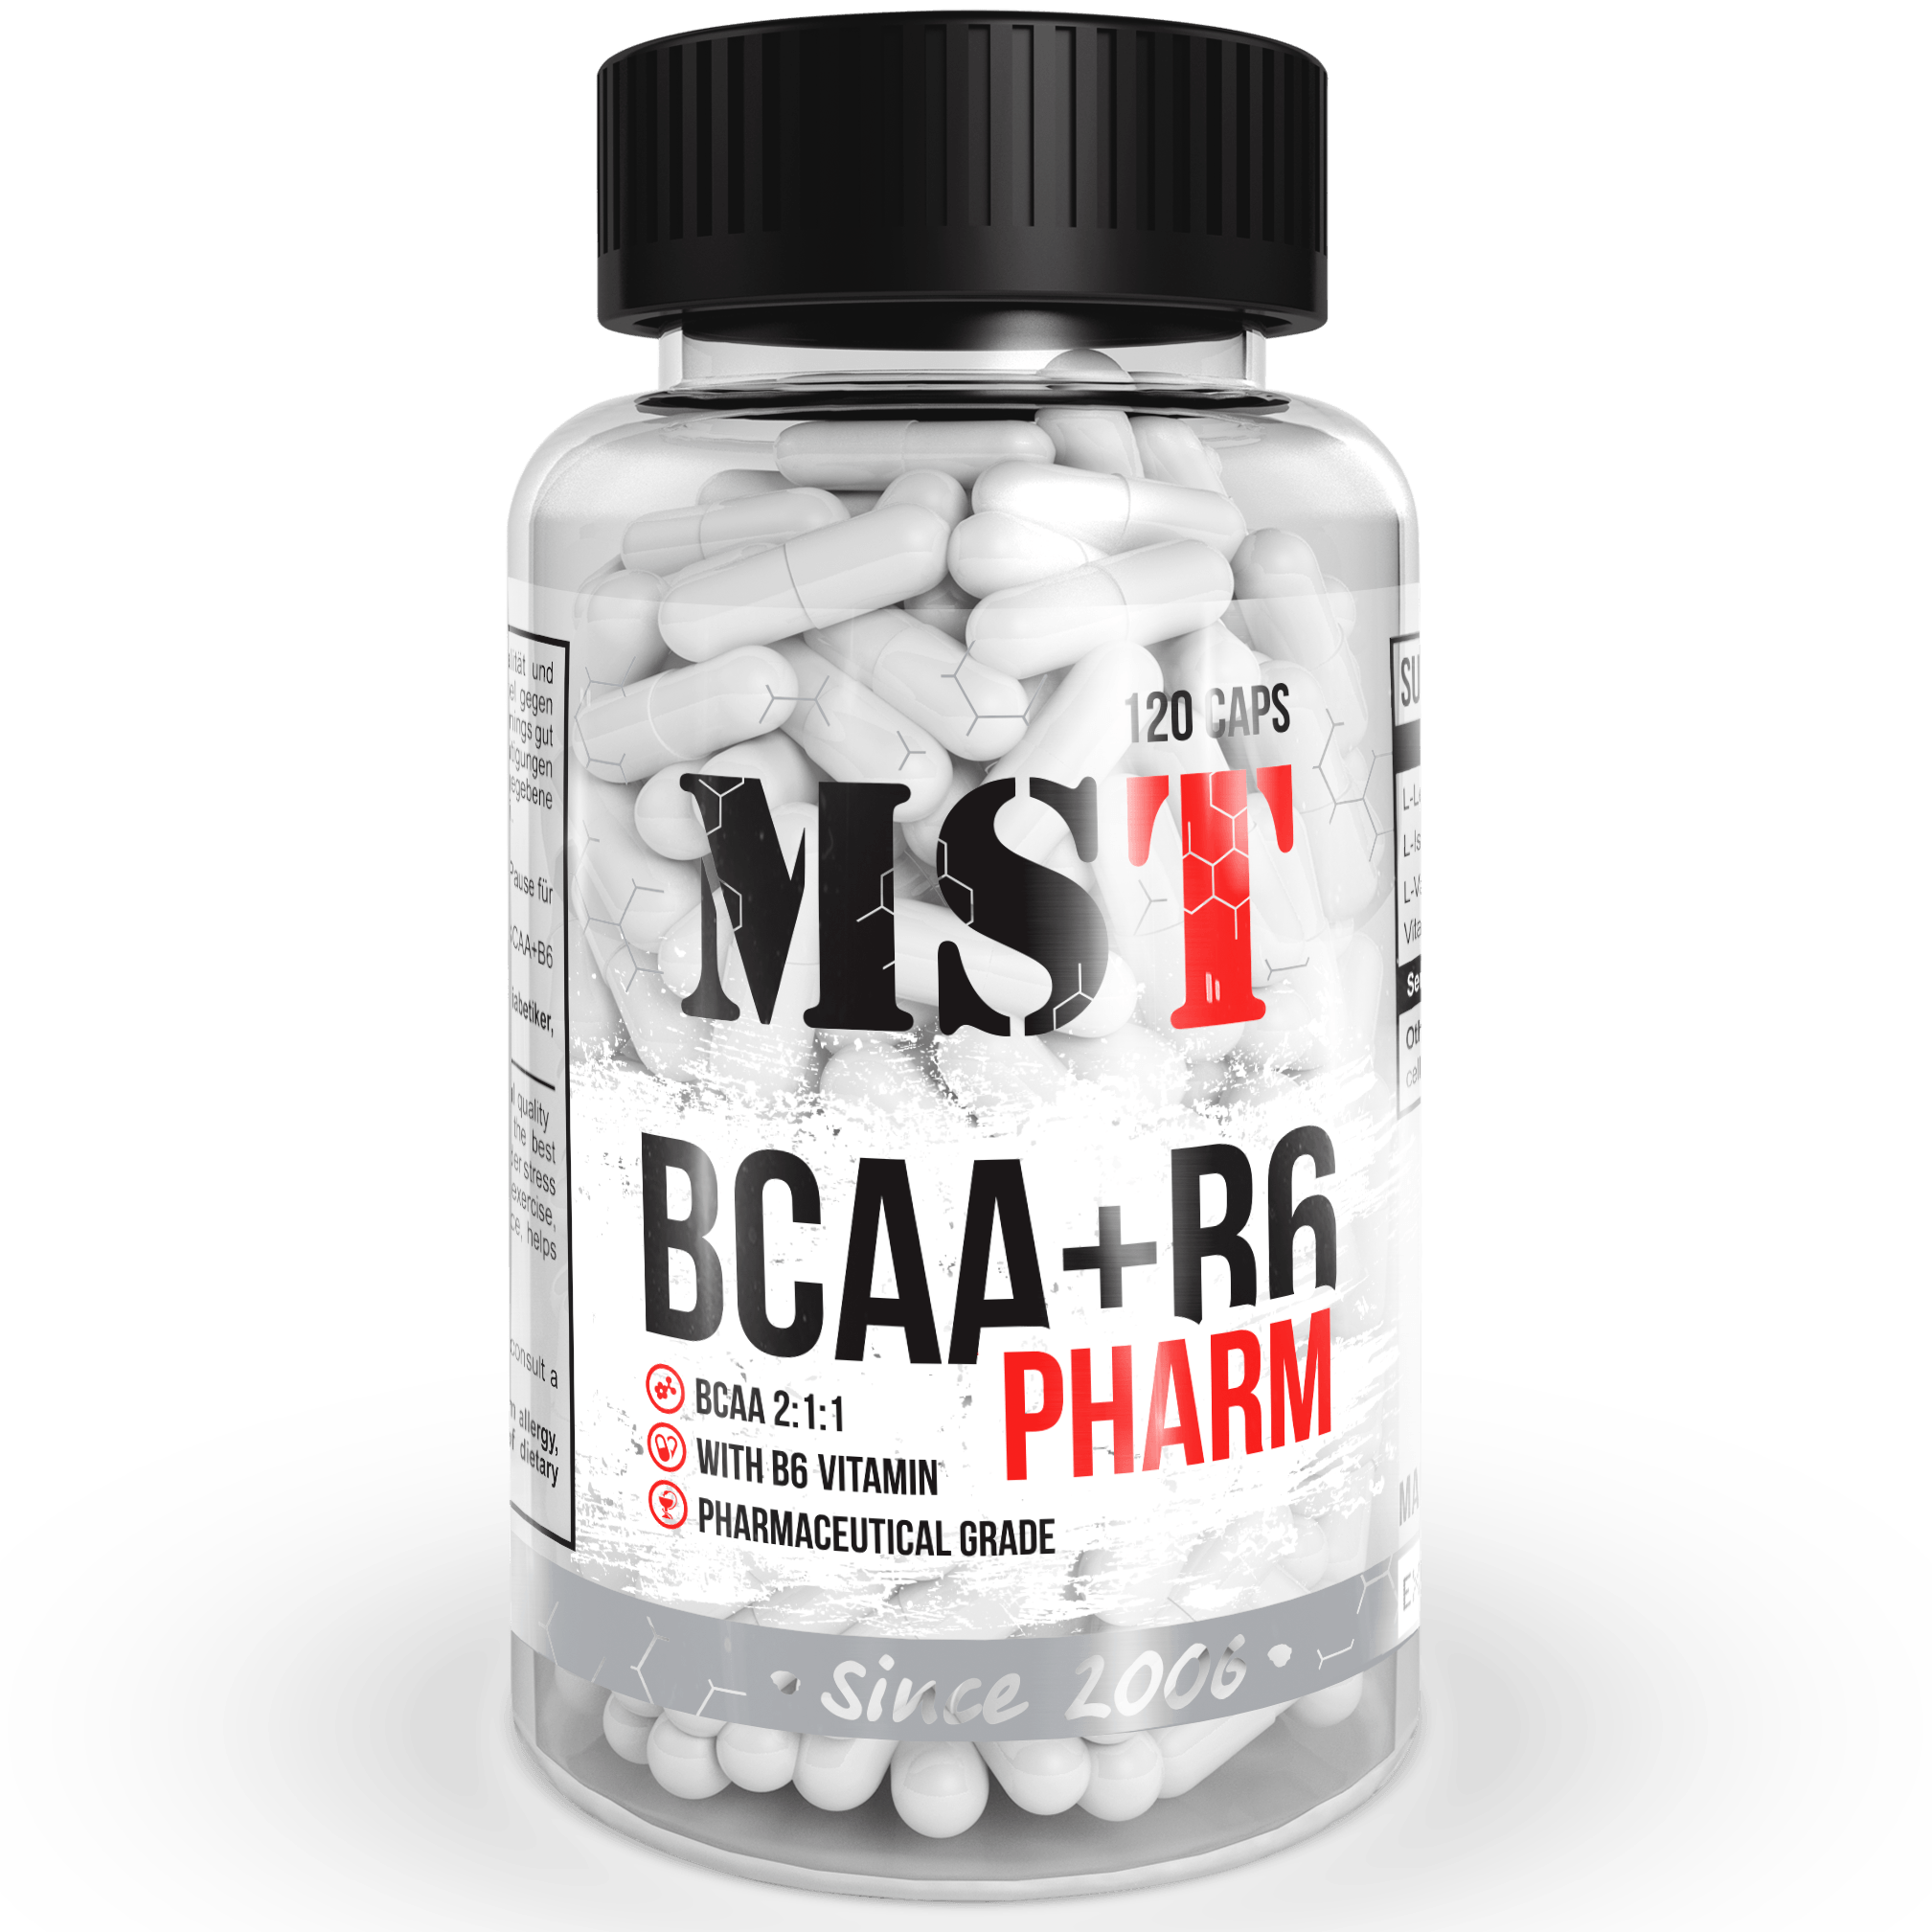 BCAA+B6 Pharm, 120 pcs, MST Nutrition. BCAA. Weight Loss स्वास्थ्य लाभ Anti-catabolic properties Lean muscle mass 